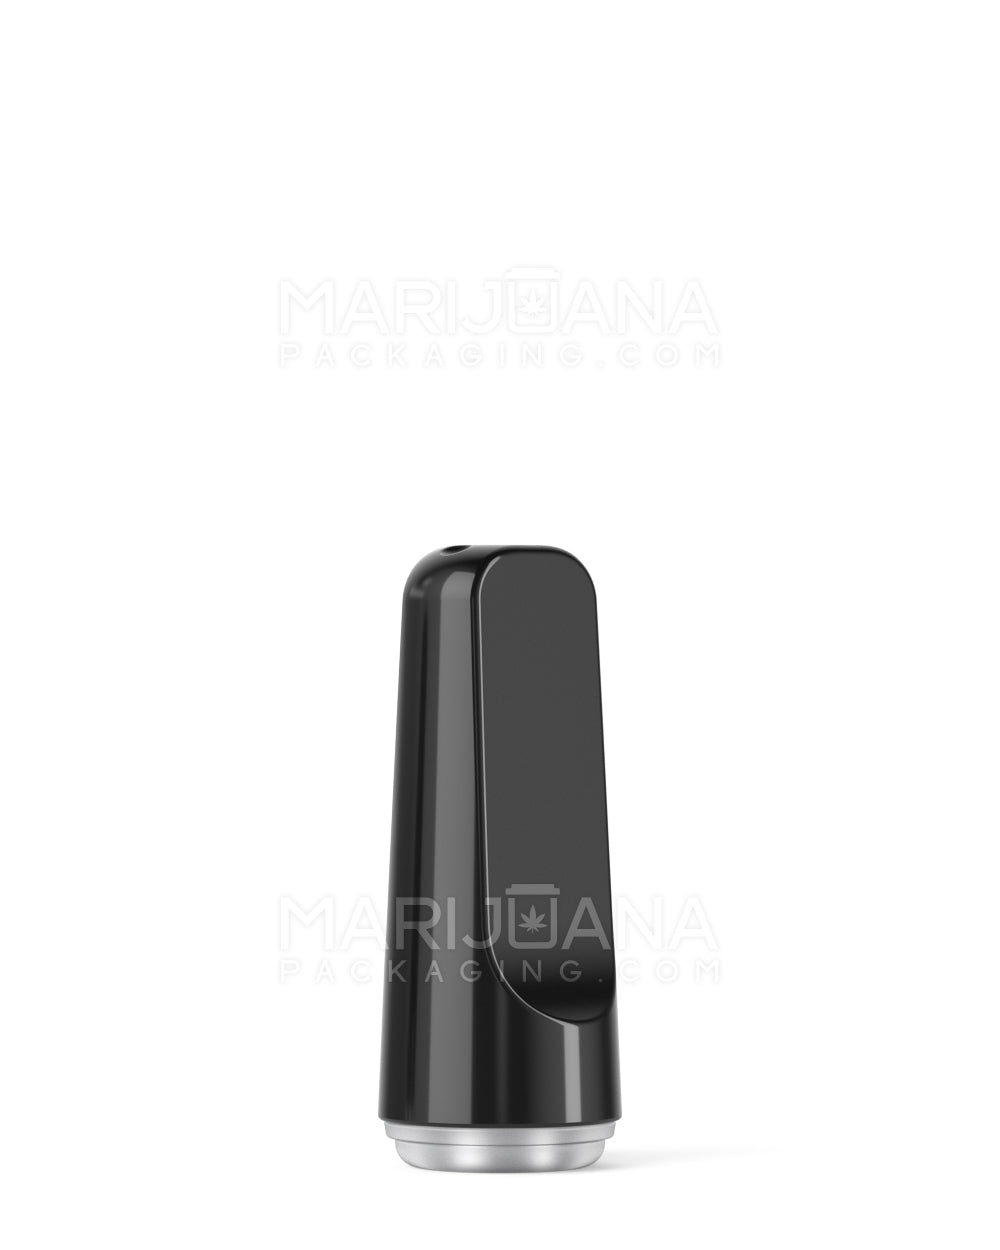 RAE | Flat Vape Mouthpiece for Screw On Plastic Cartridges | Black Plastic - Screw On - 100 Count